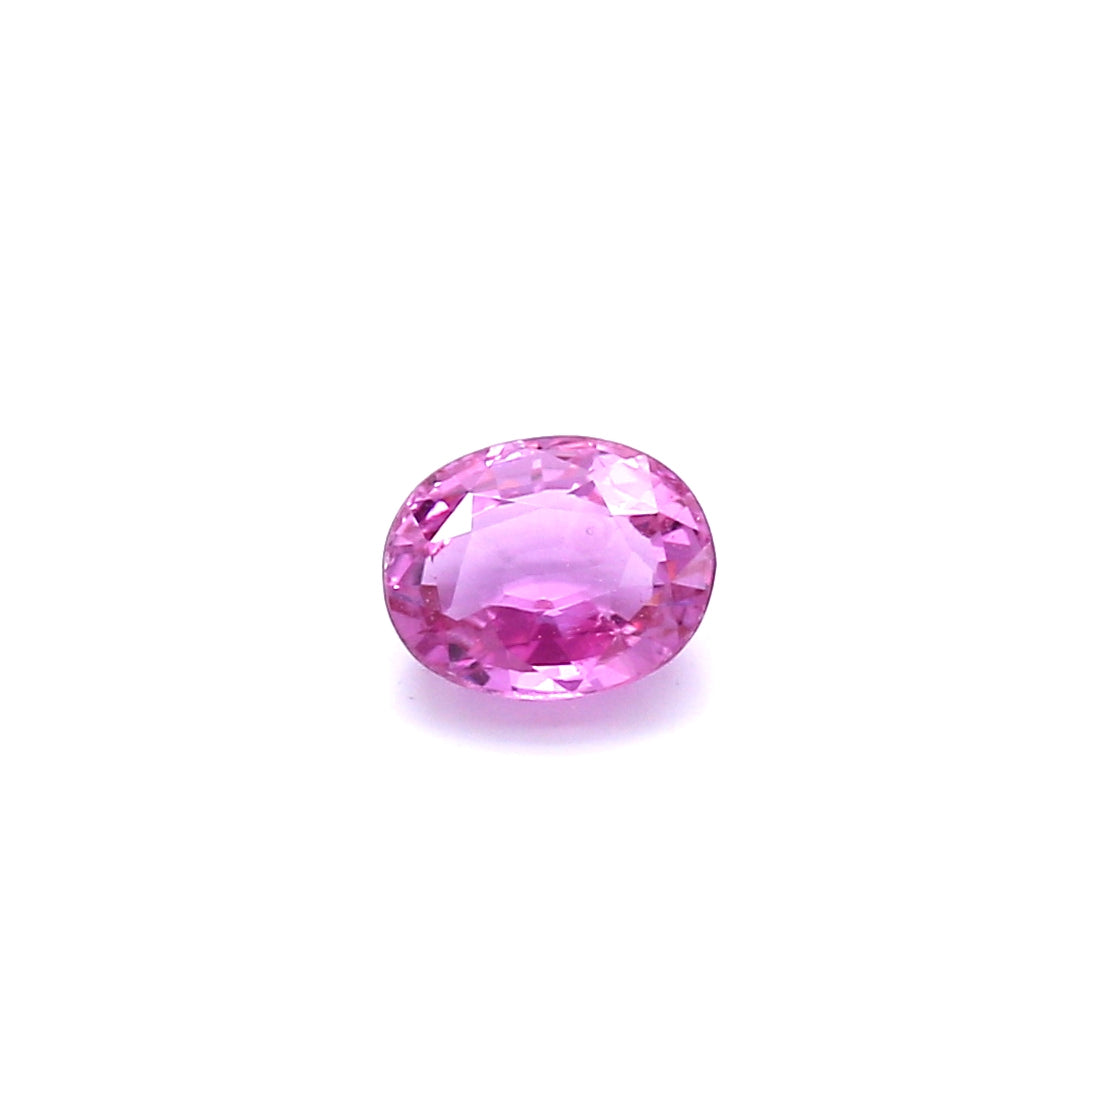 0.76ct Purplish Pink, Oval Sapphire, Heated, Madagascar - 5.80 x 4.75 x 2.80mm